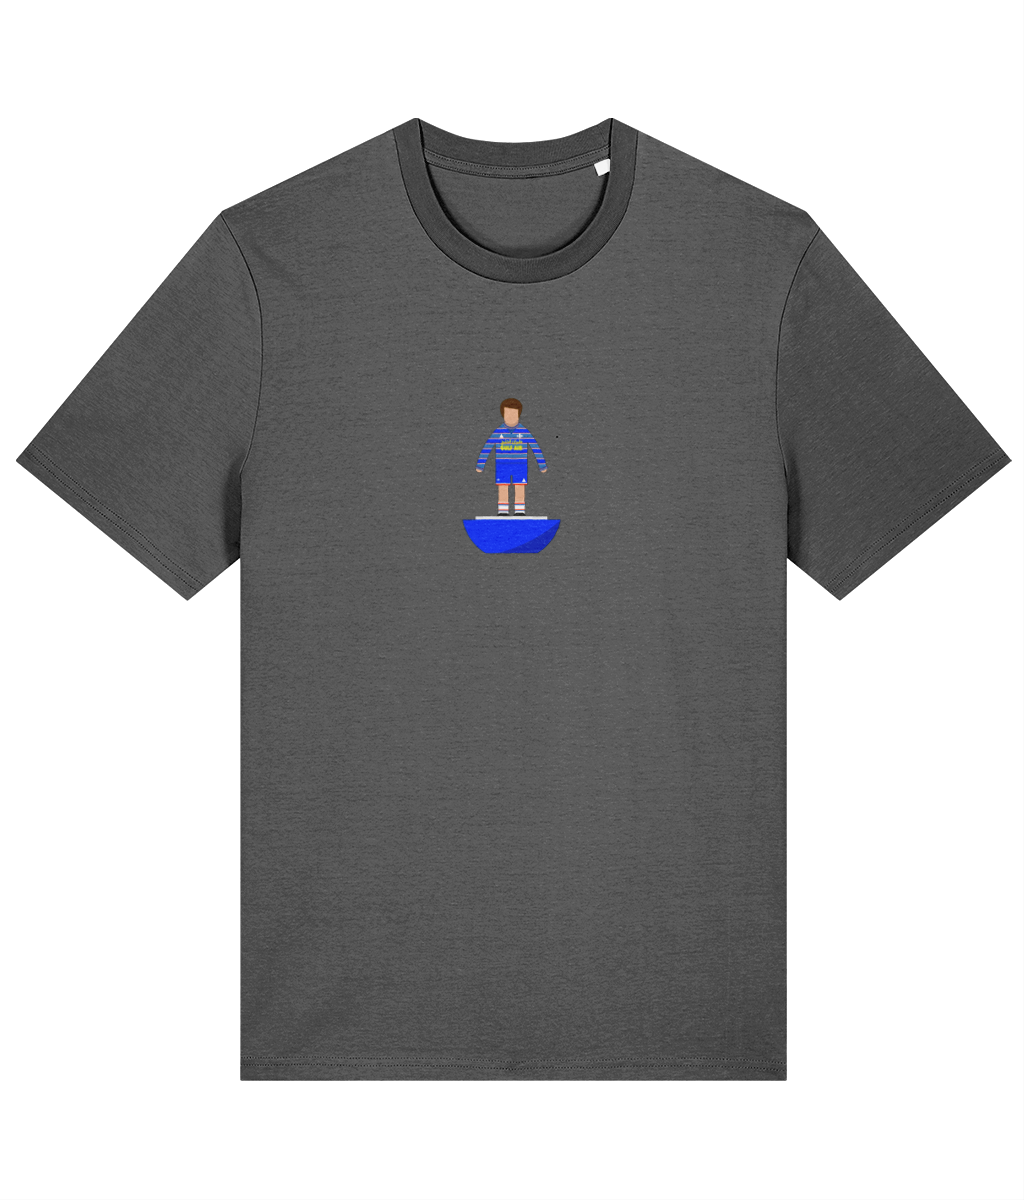 Football Kits 'Chelsea 1983' Unisex T-Shirt